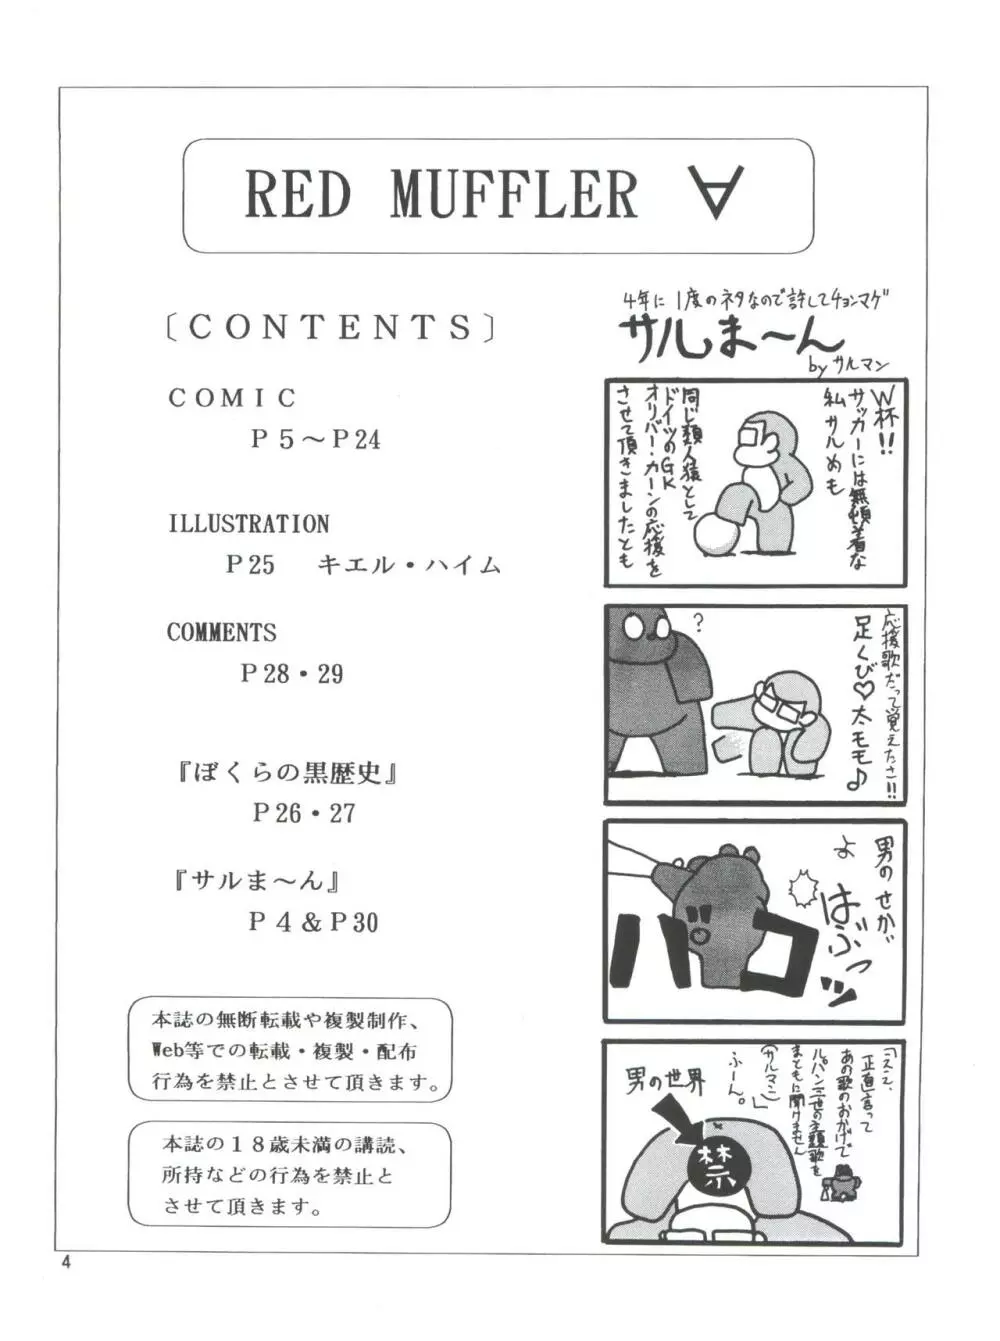 RED MUFFLER ∀ - page3